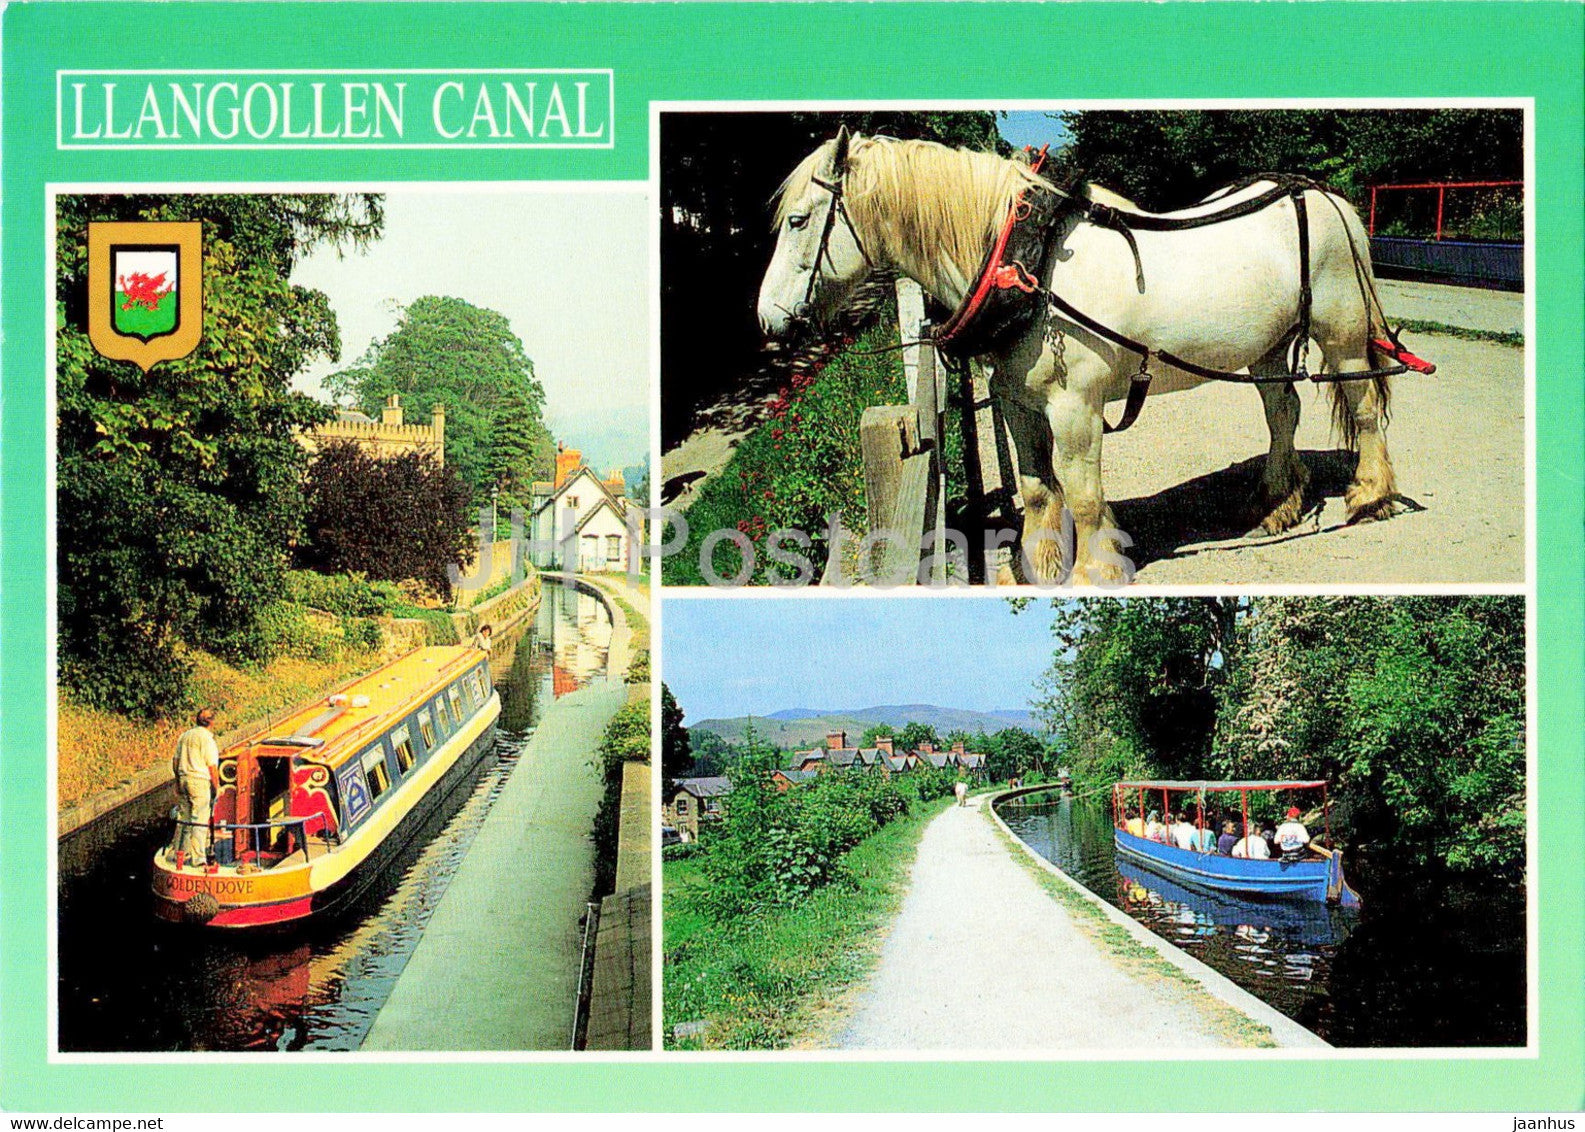 Llangollen Canal - boat - horse - Wales - United Kingdom - unused - JH Postcards